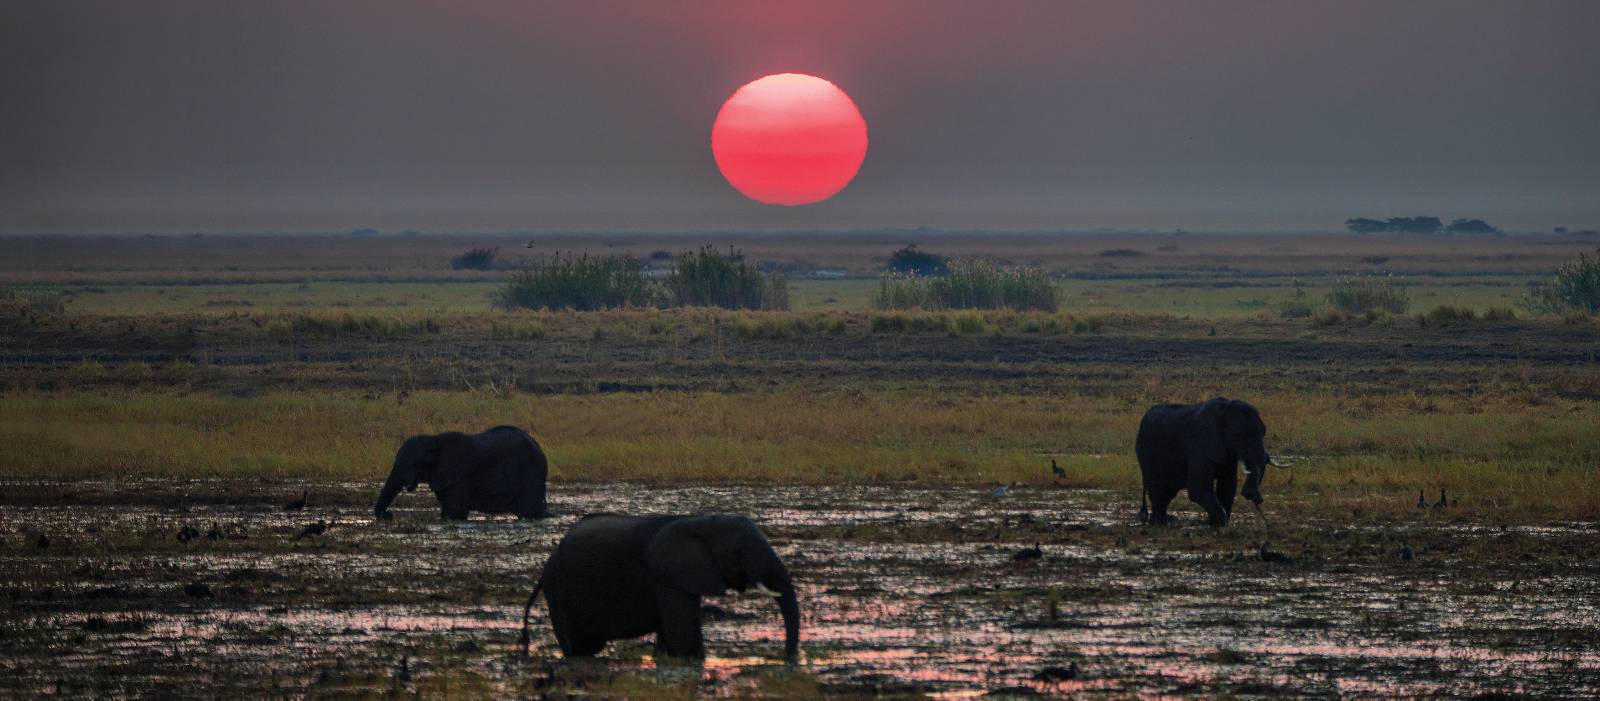 Breathtaking sunset over the African plains |  <i>Peter Walton</i>